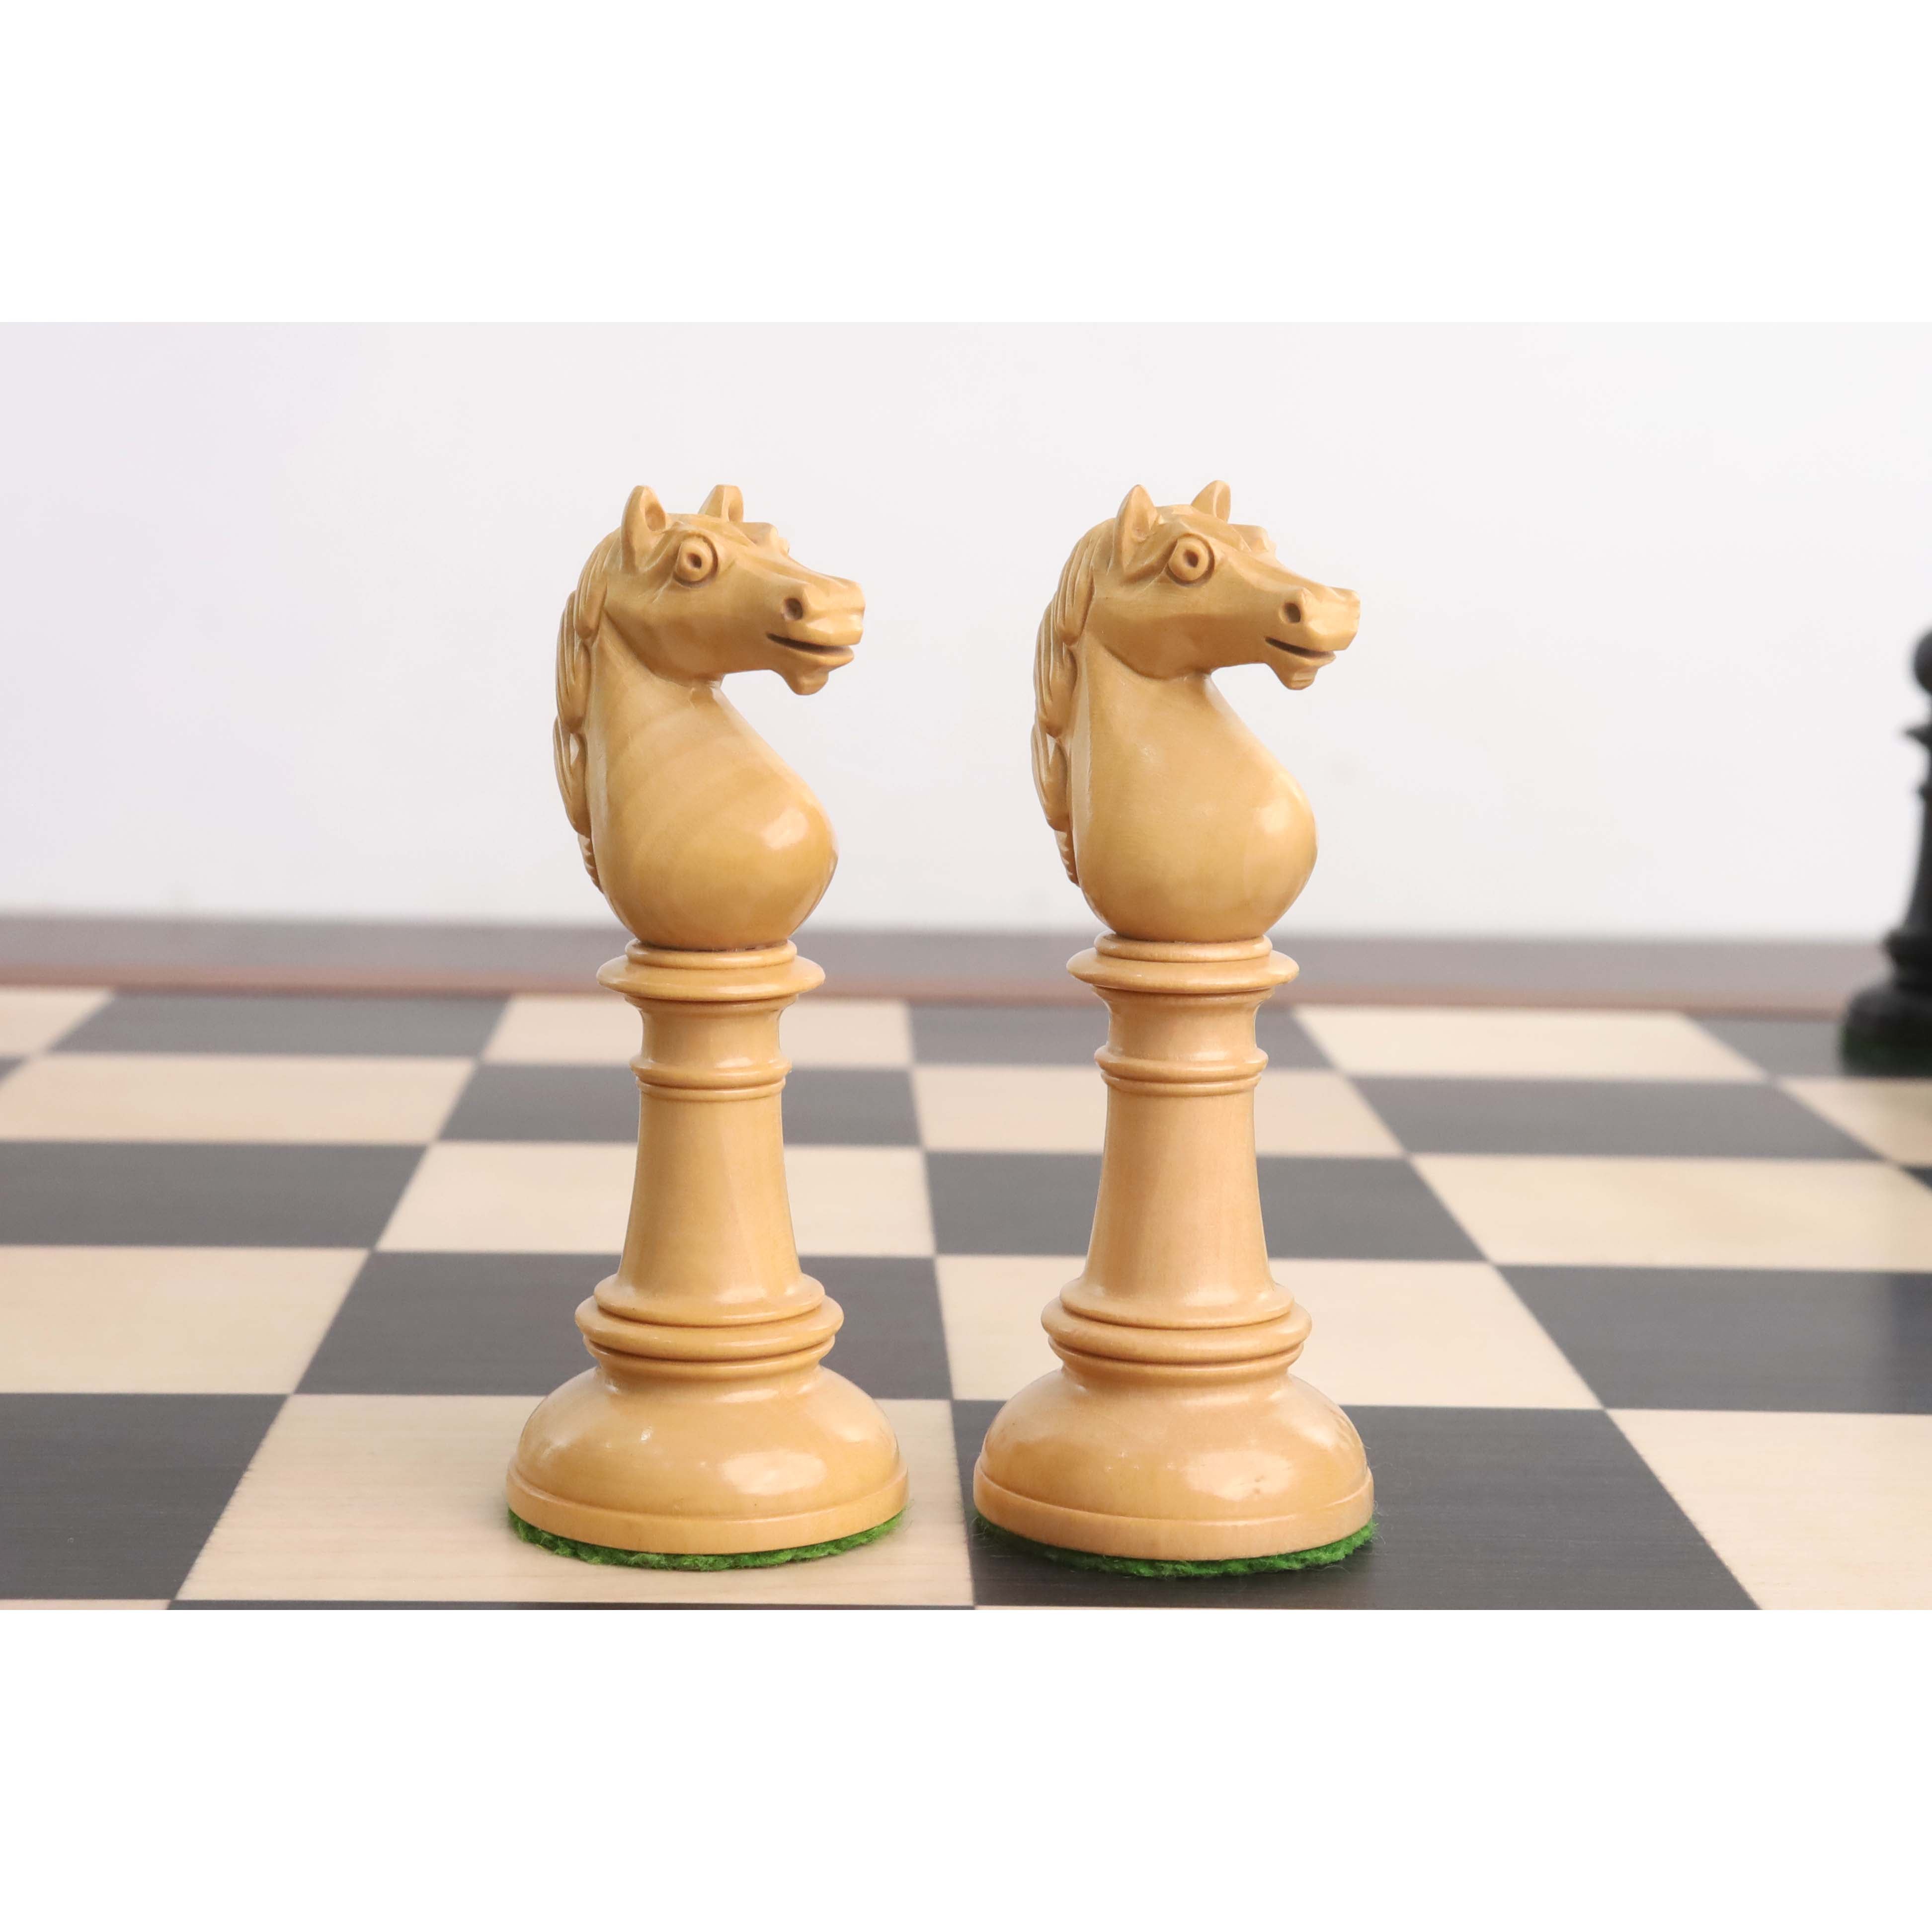 4" Edinburgh Northern Upright Pre-Staunton Chess Pieces Only set - Ebony Wood